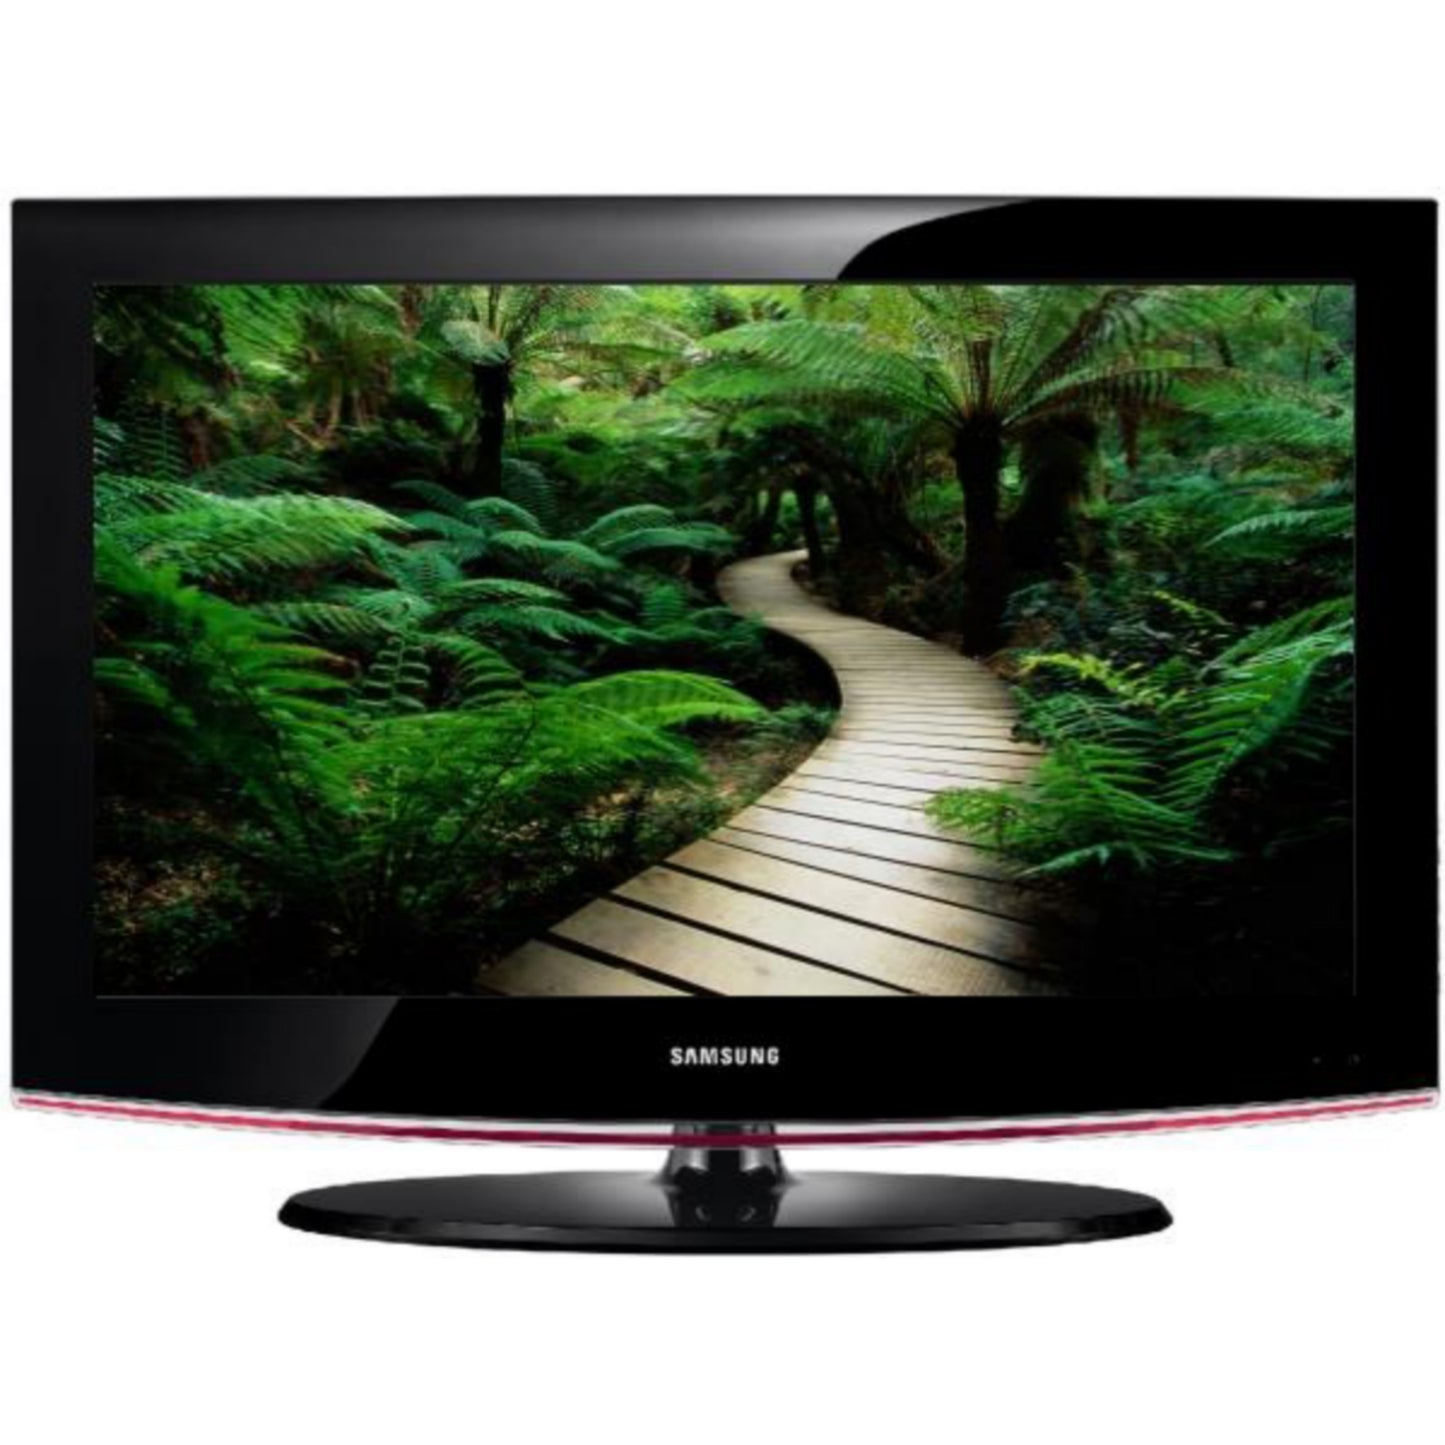 SAMSUNG 26 Inch LE26B450C4W LCD TV - London Used